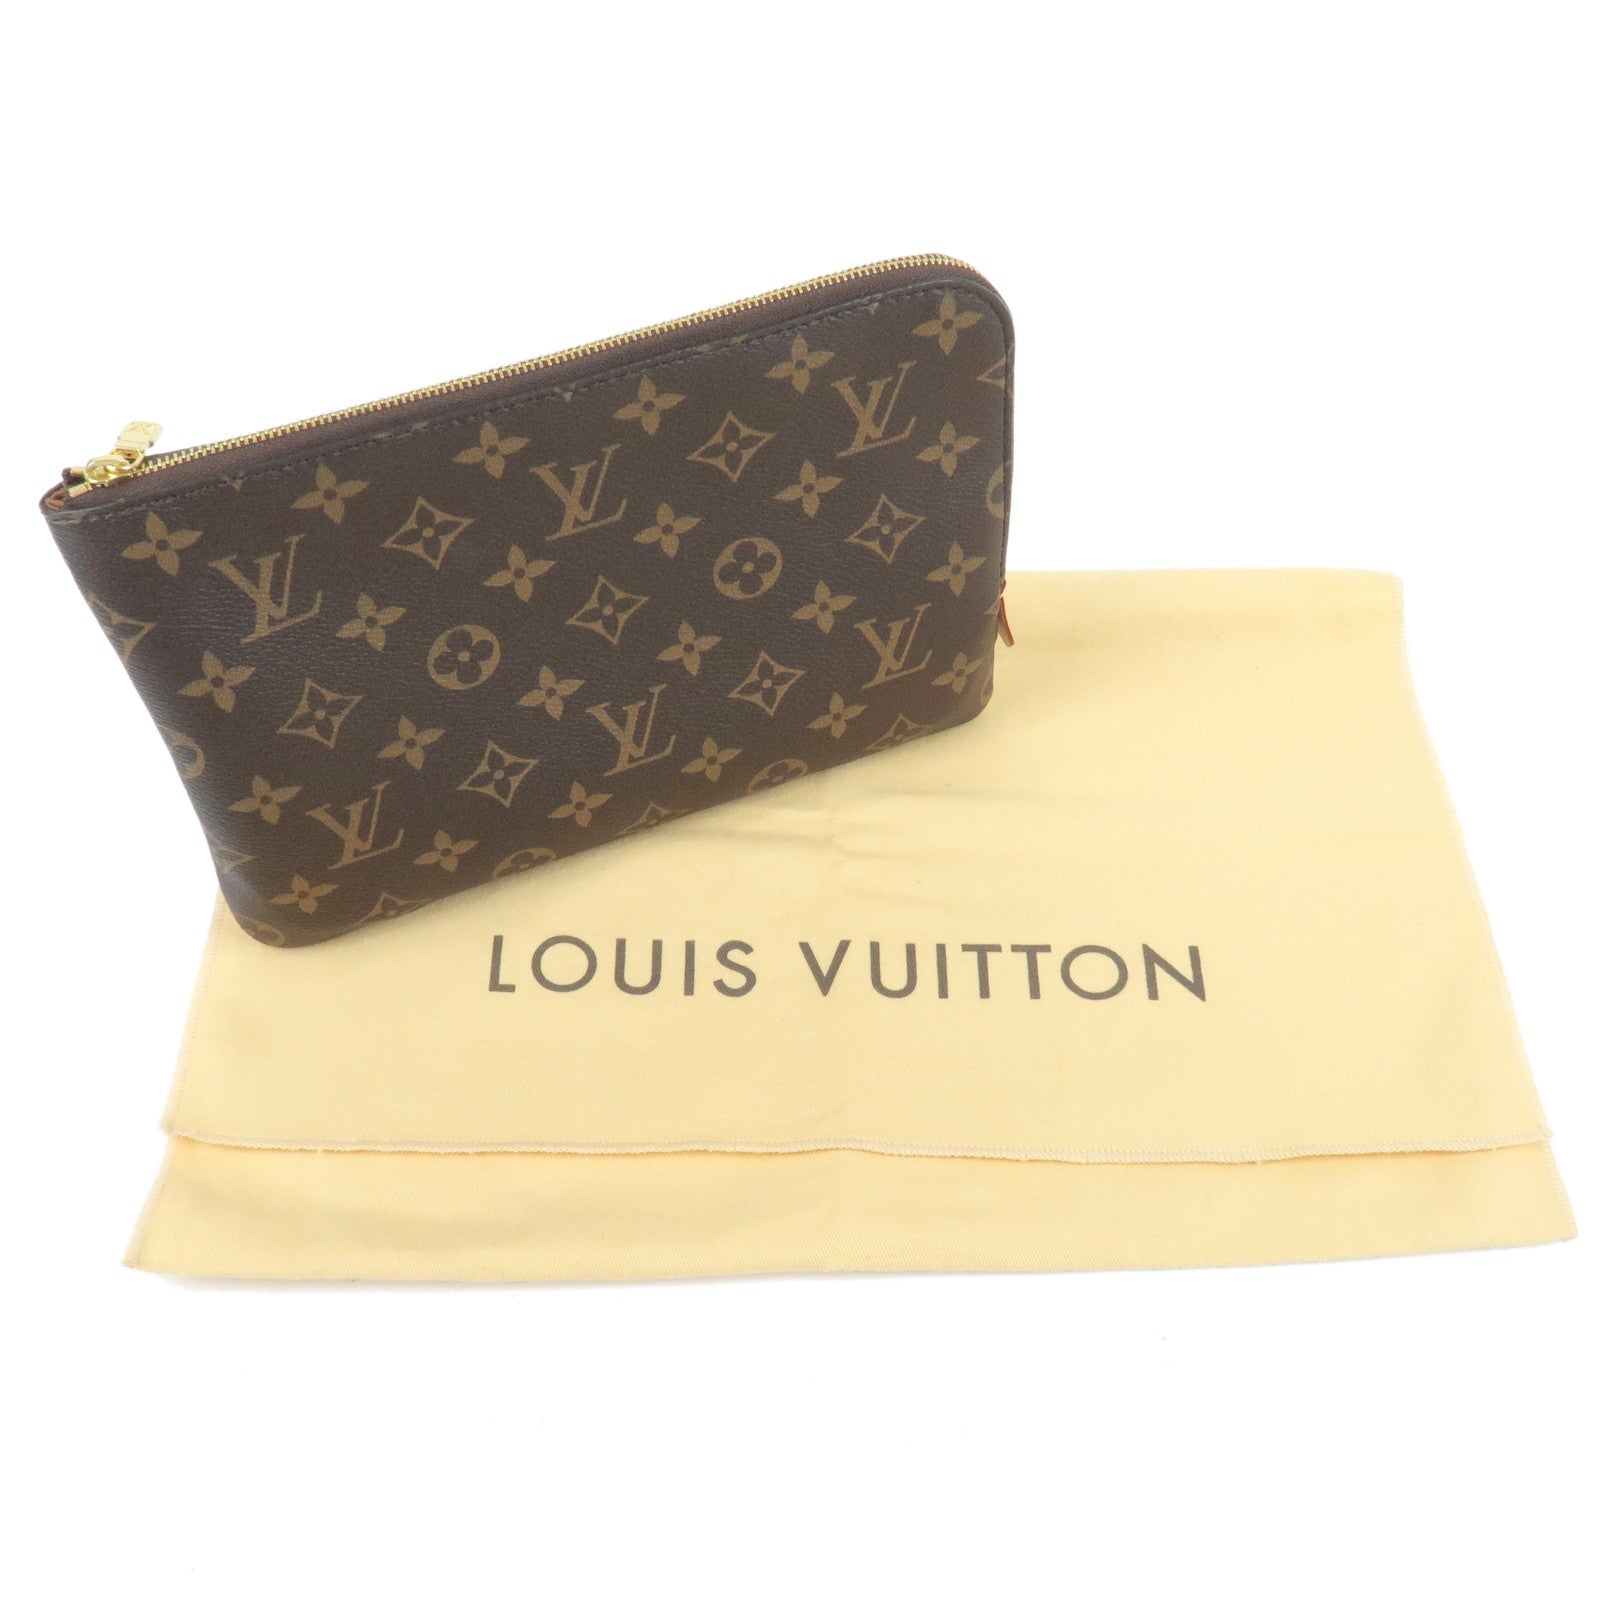 Louis Vuitton Etui Voyage Mm Reviewer